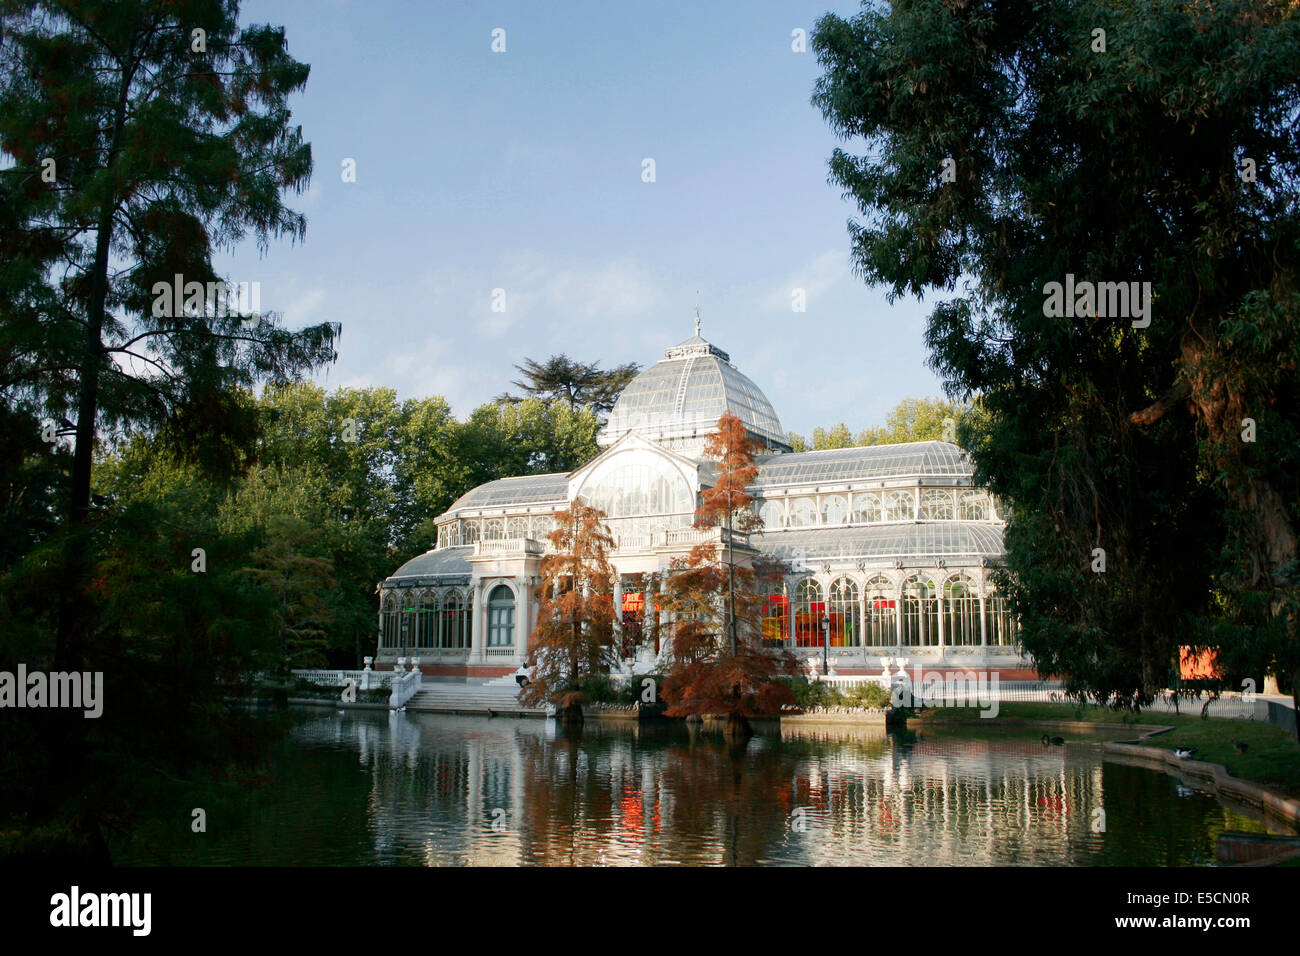 Palacio de Cristal or Crystal Palace in Buen Retiro park, Madrid Stock Photo